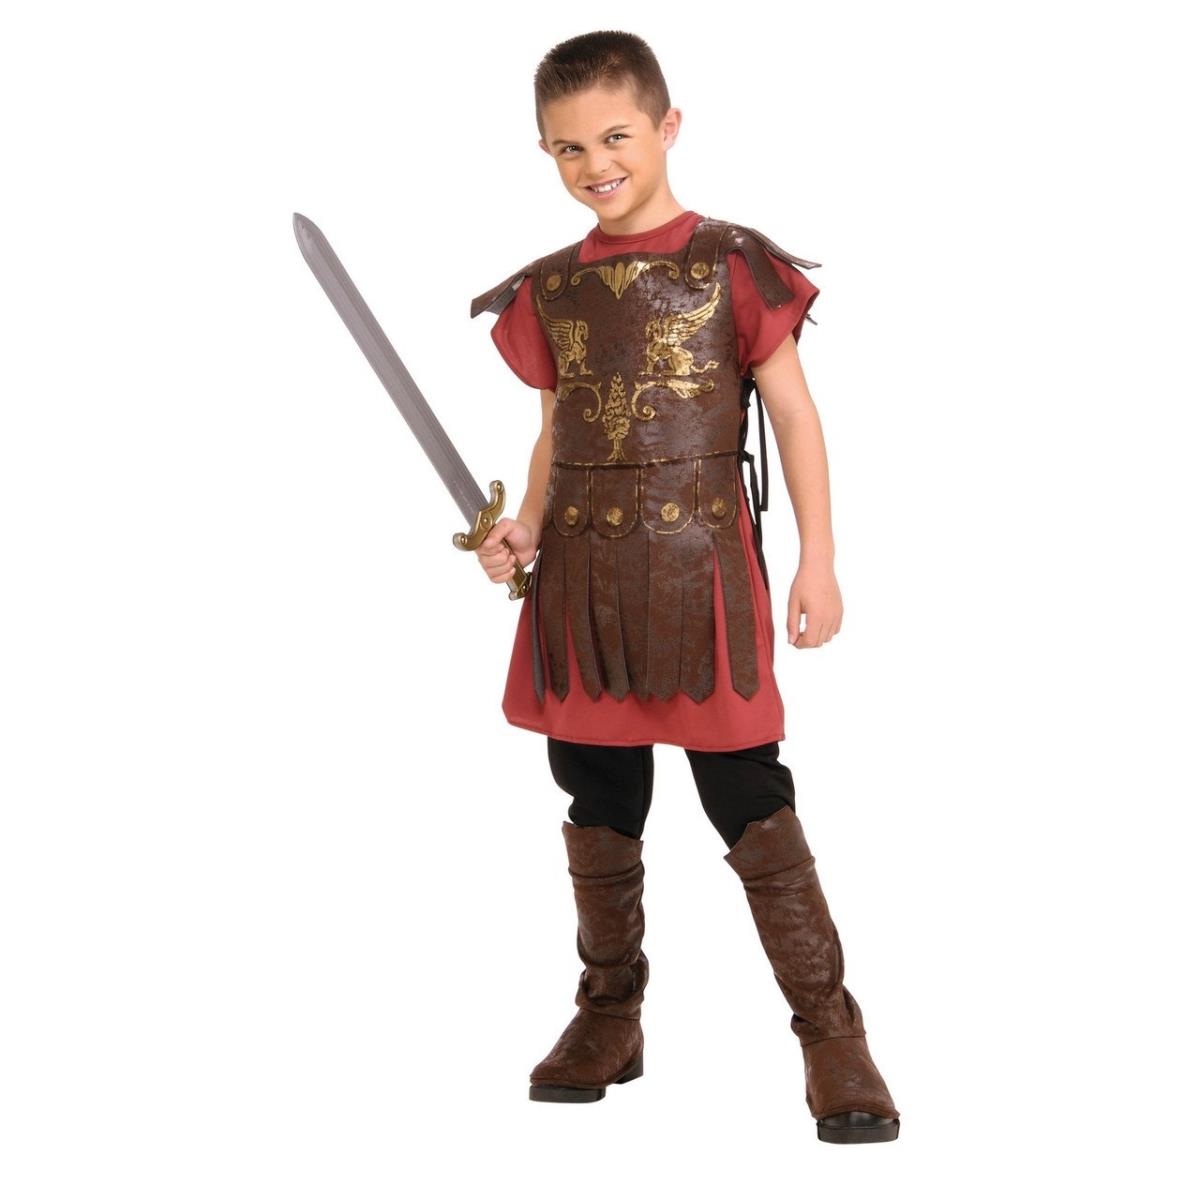 286788 Gladiator Kids Costume, Medium